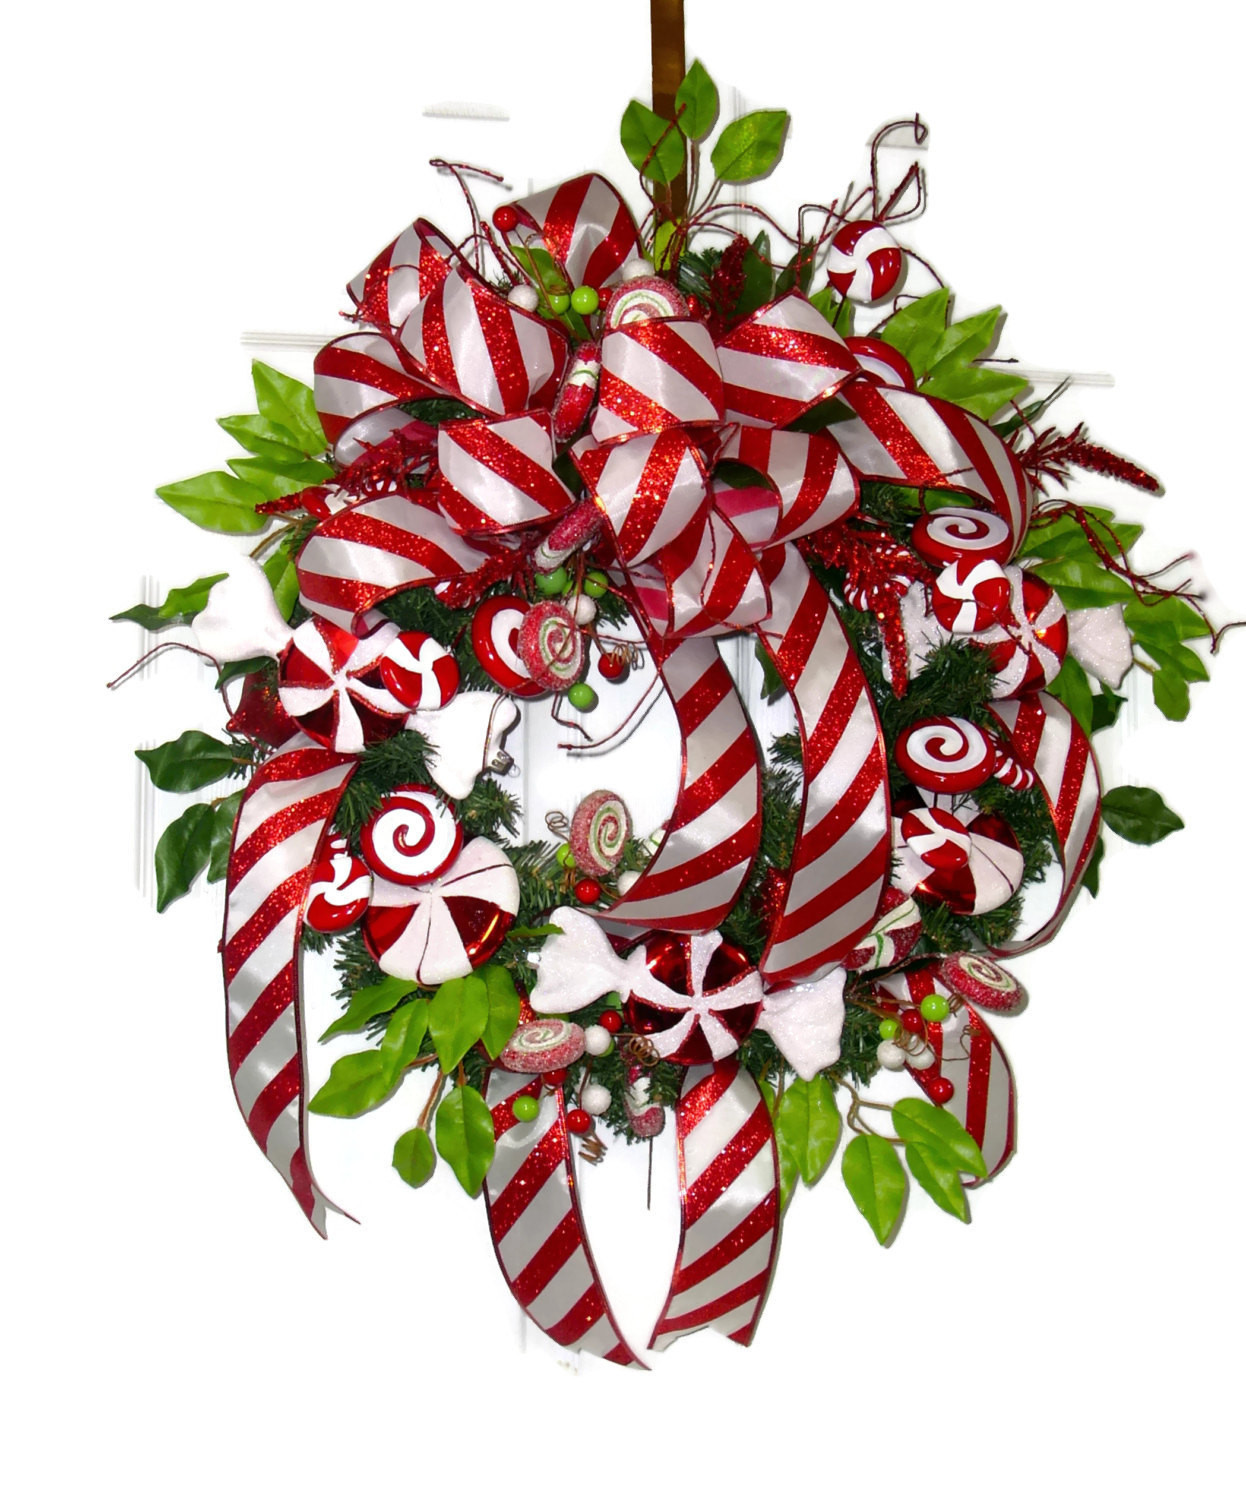 Christmas Wreath Candy
 Candy Cane Christmas Wreath Red and White Christmas Wreath